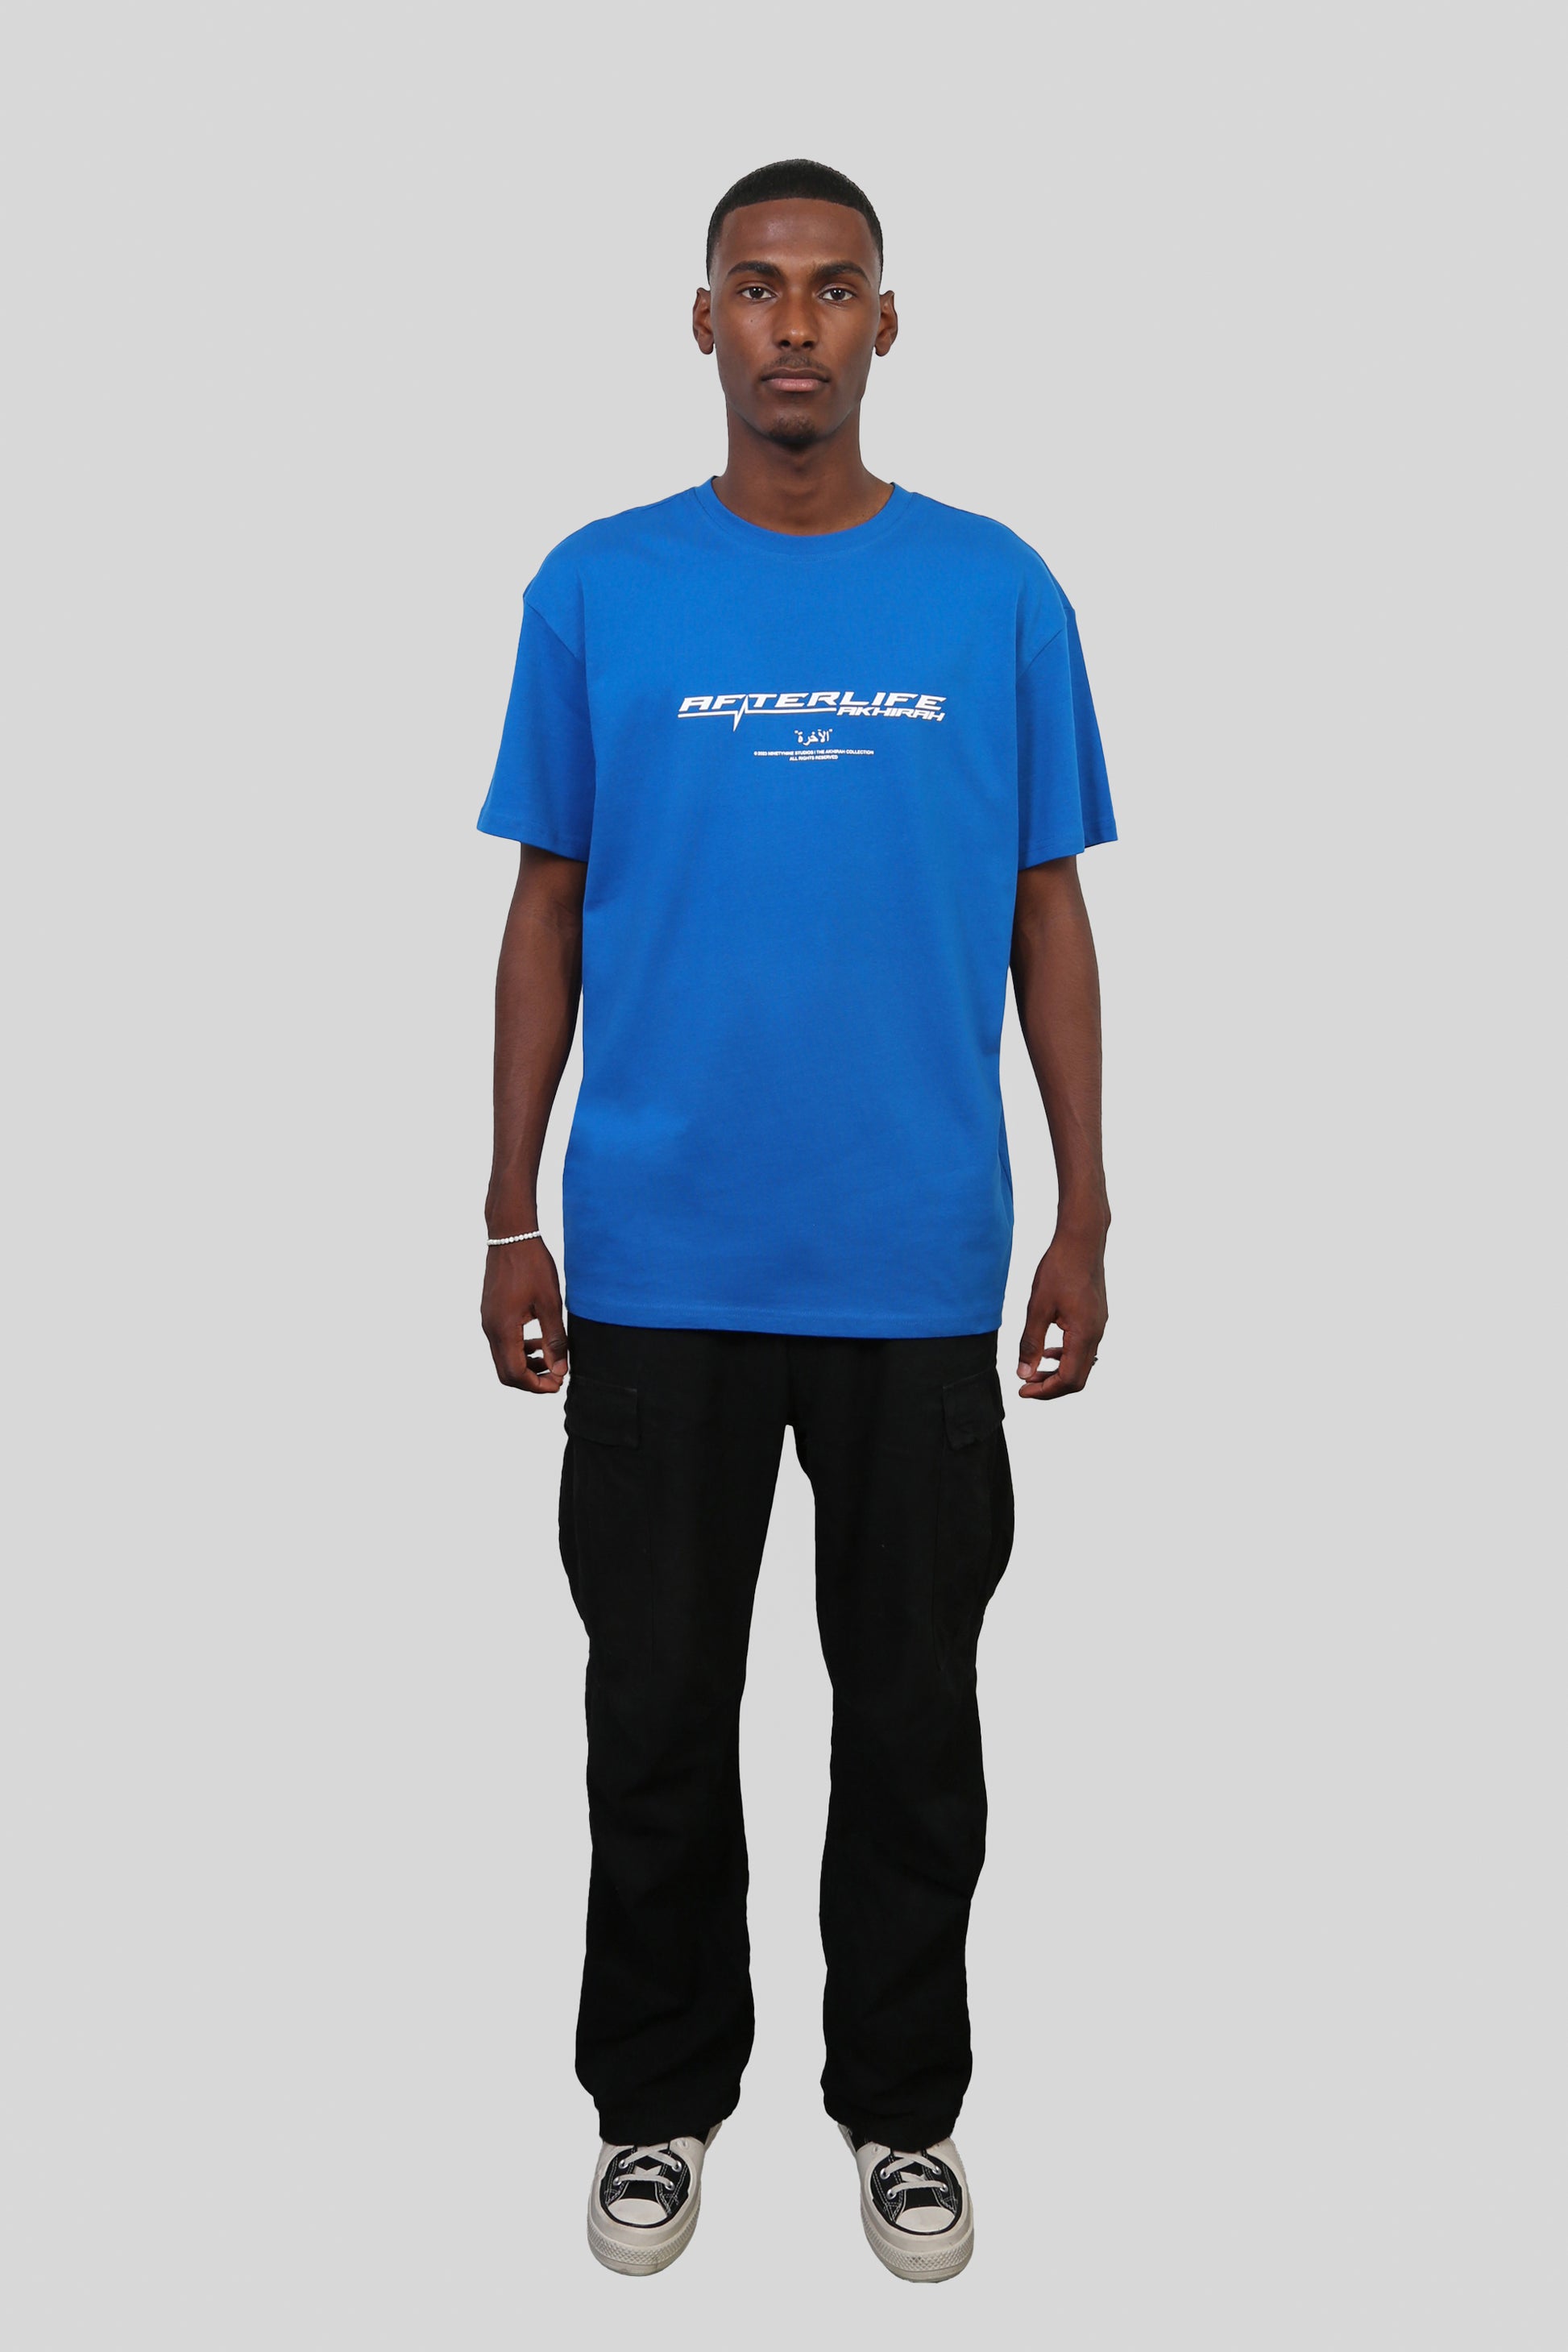 www.ninetyninestudios.de| AFTERLIFE T-SHIRT BLUE| T-Shirt | €34.99 | Revolutionary Islamic Streetwear | 99Studios